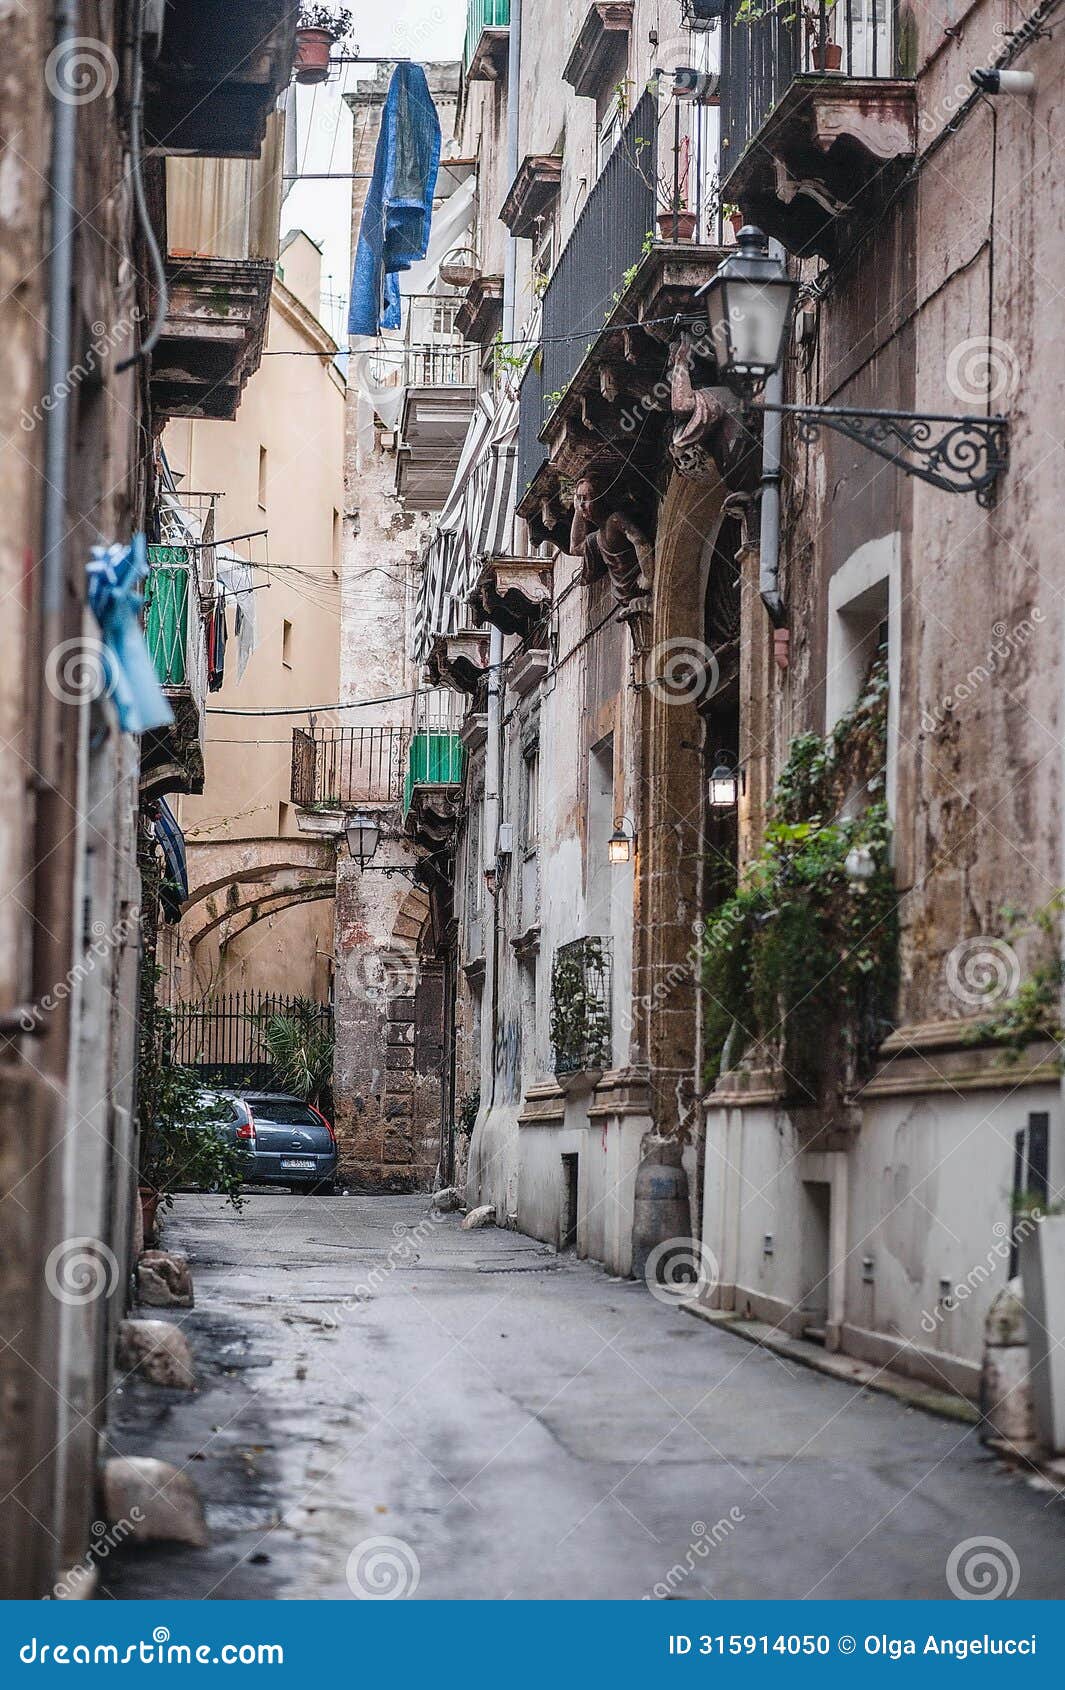 narrow streets of old town of taranto,